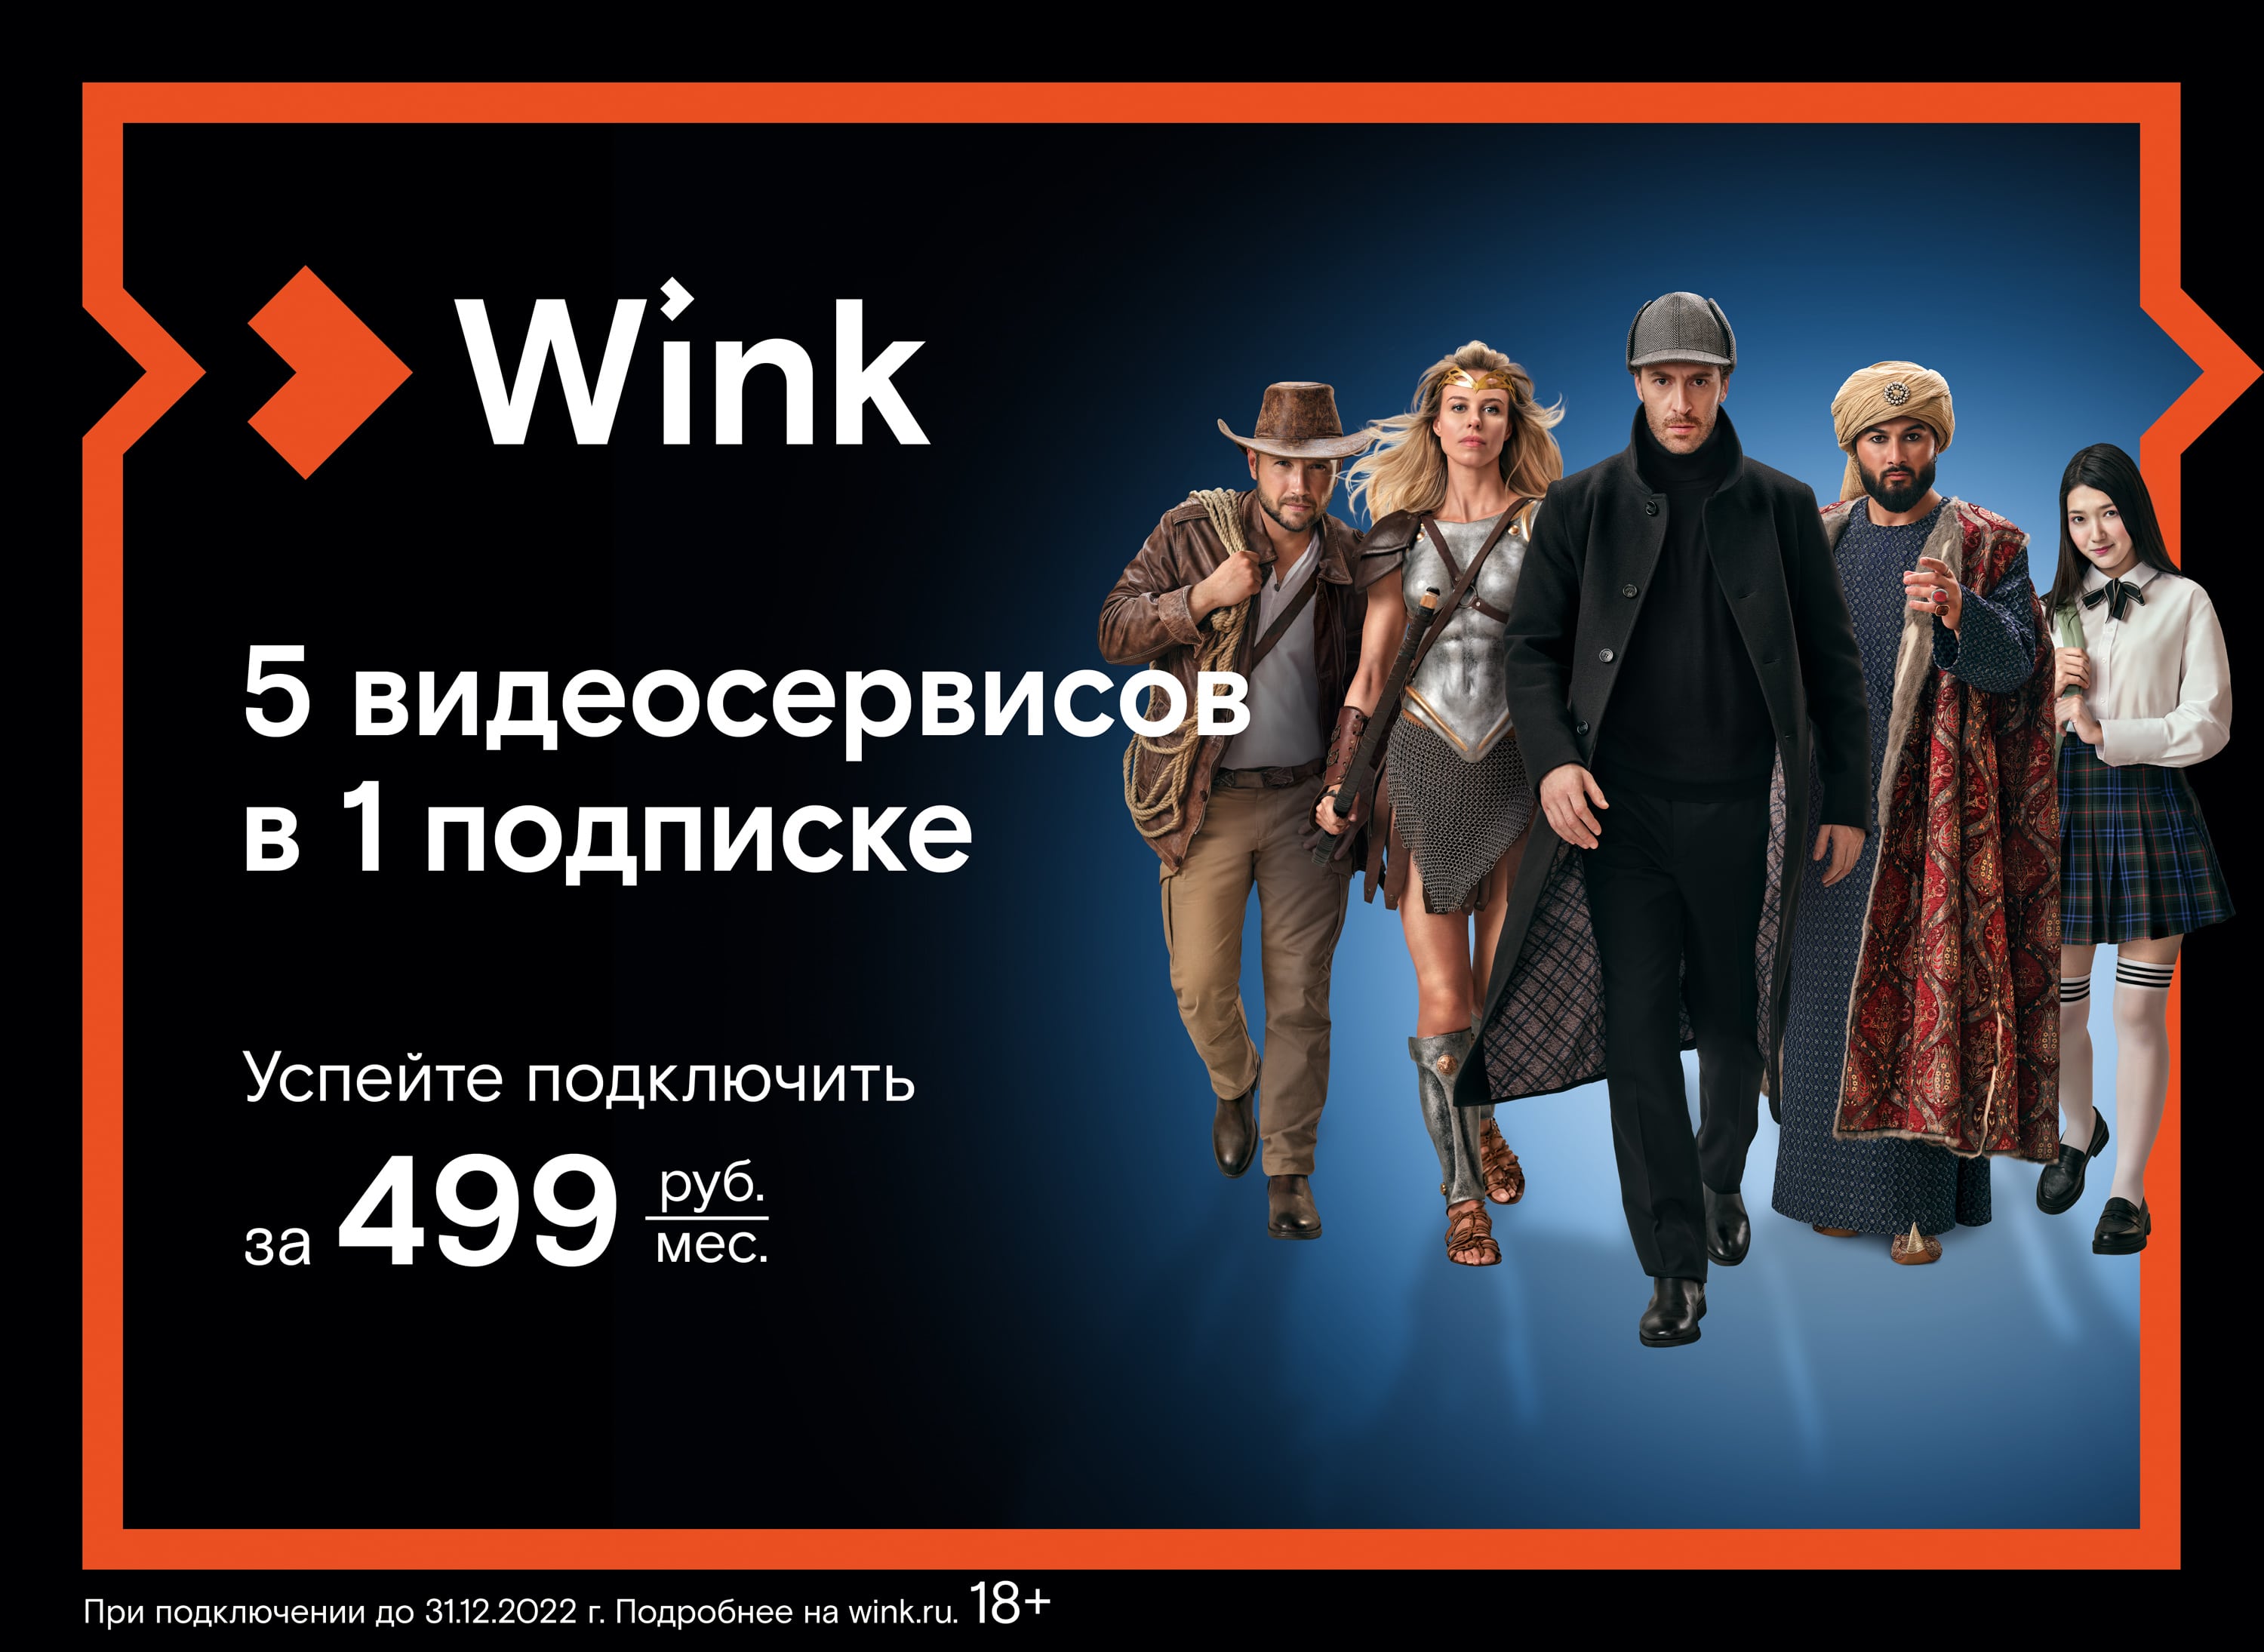    wink   5--1 